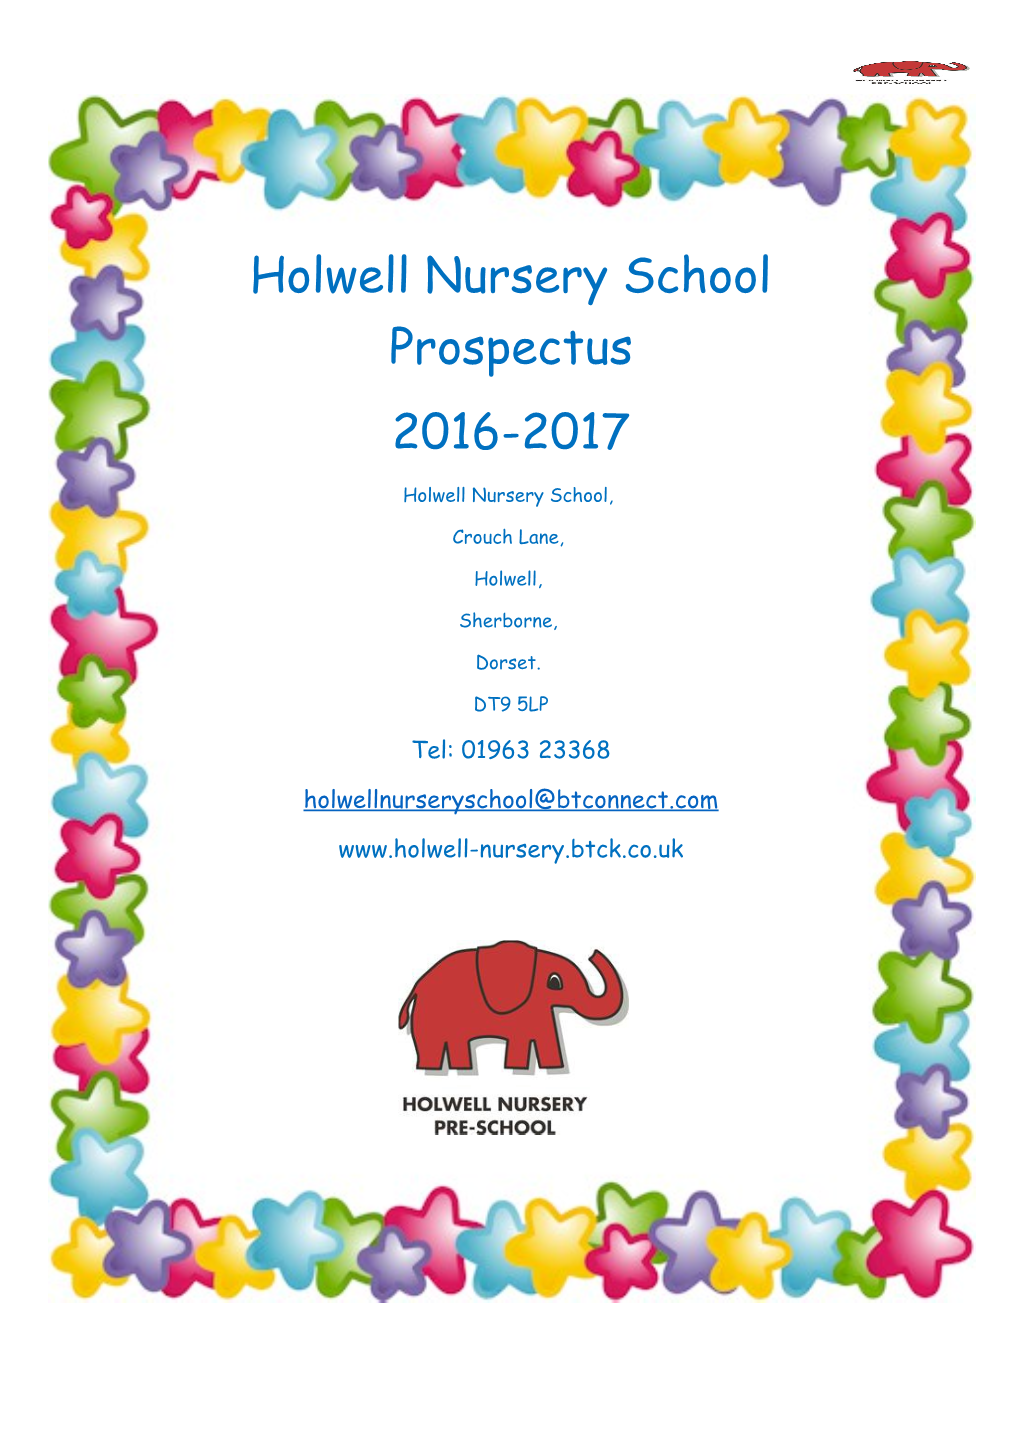 Holwell Nursery School Prospectus